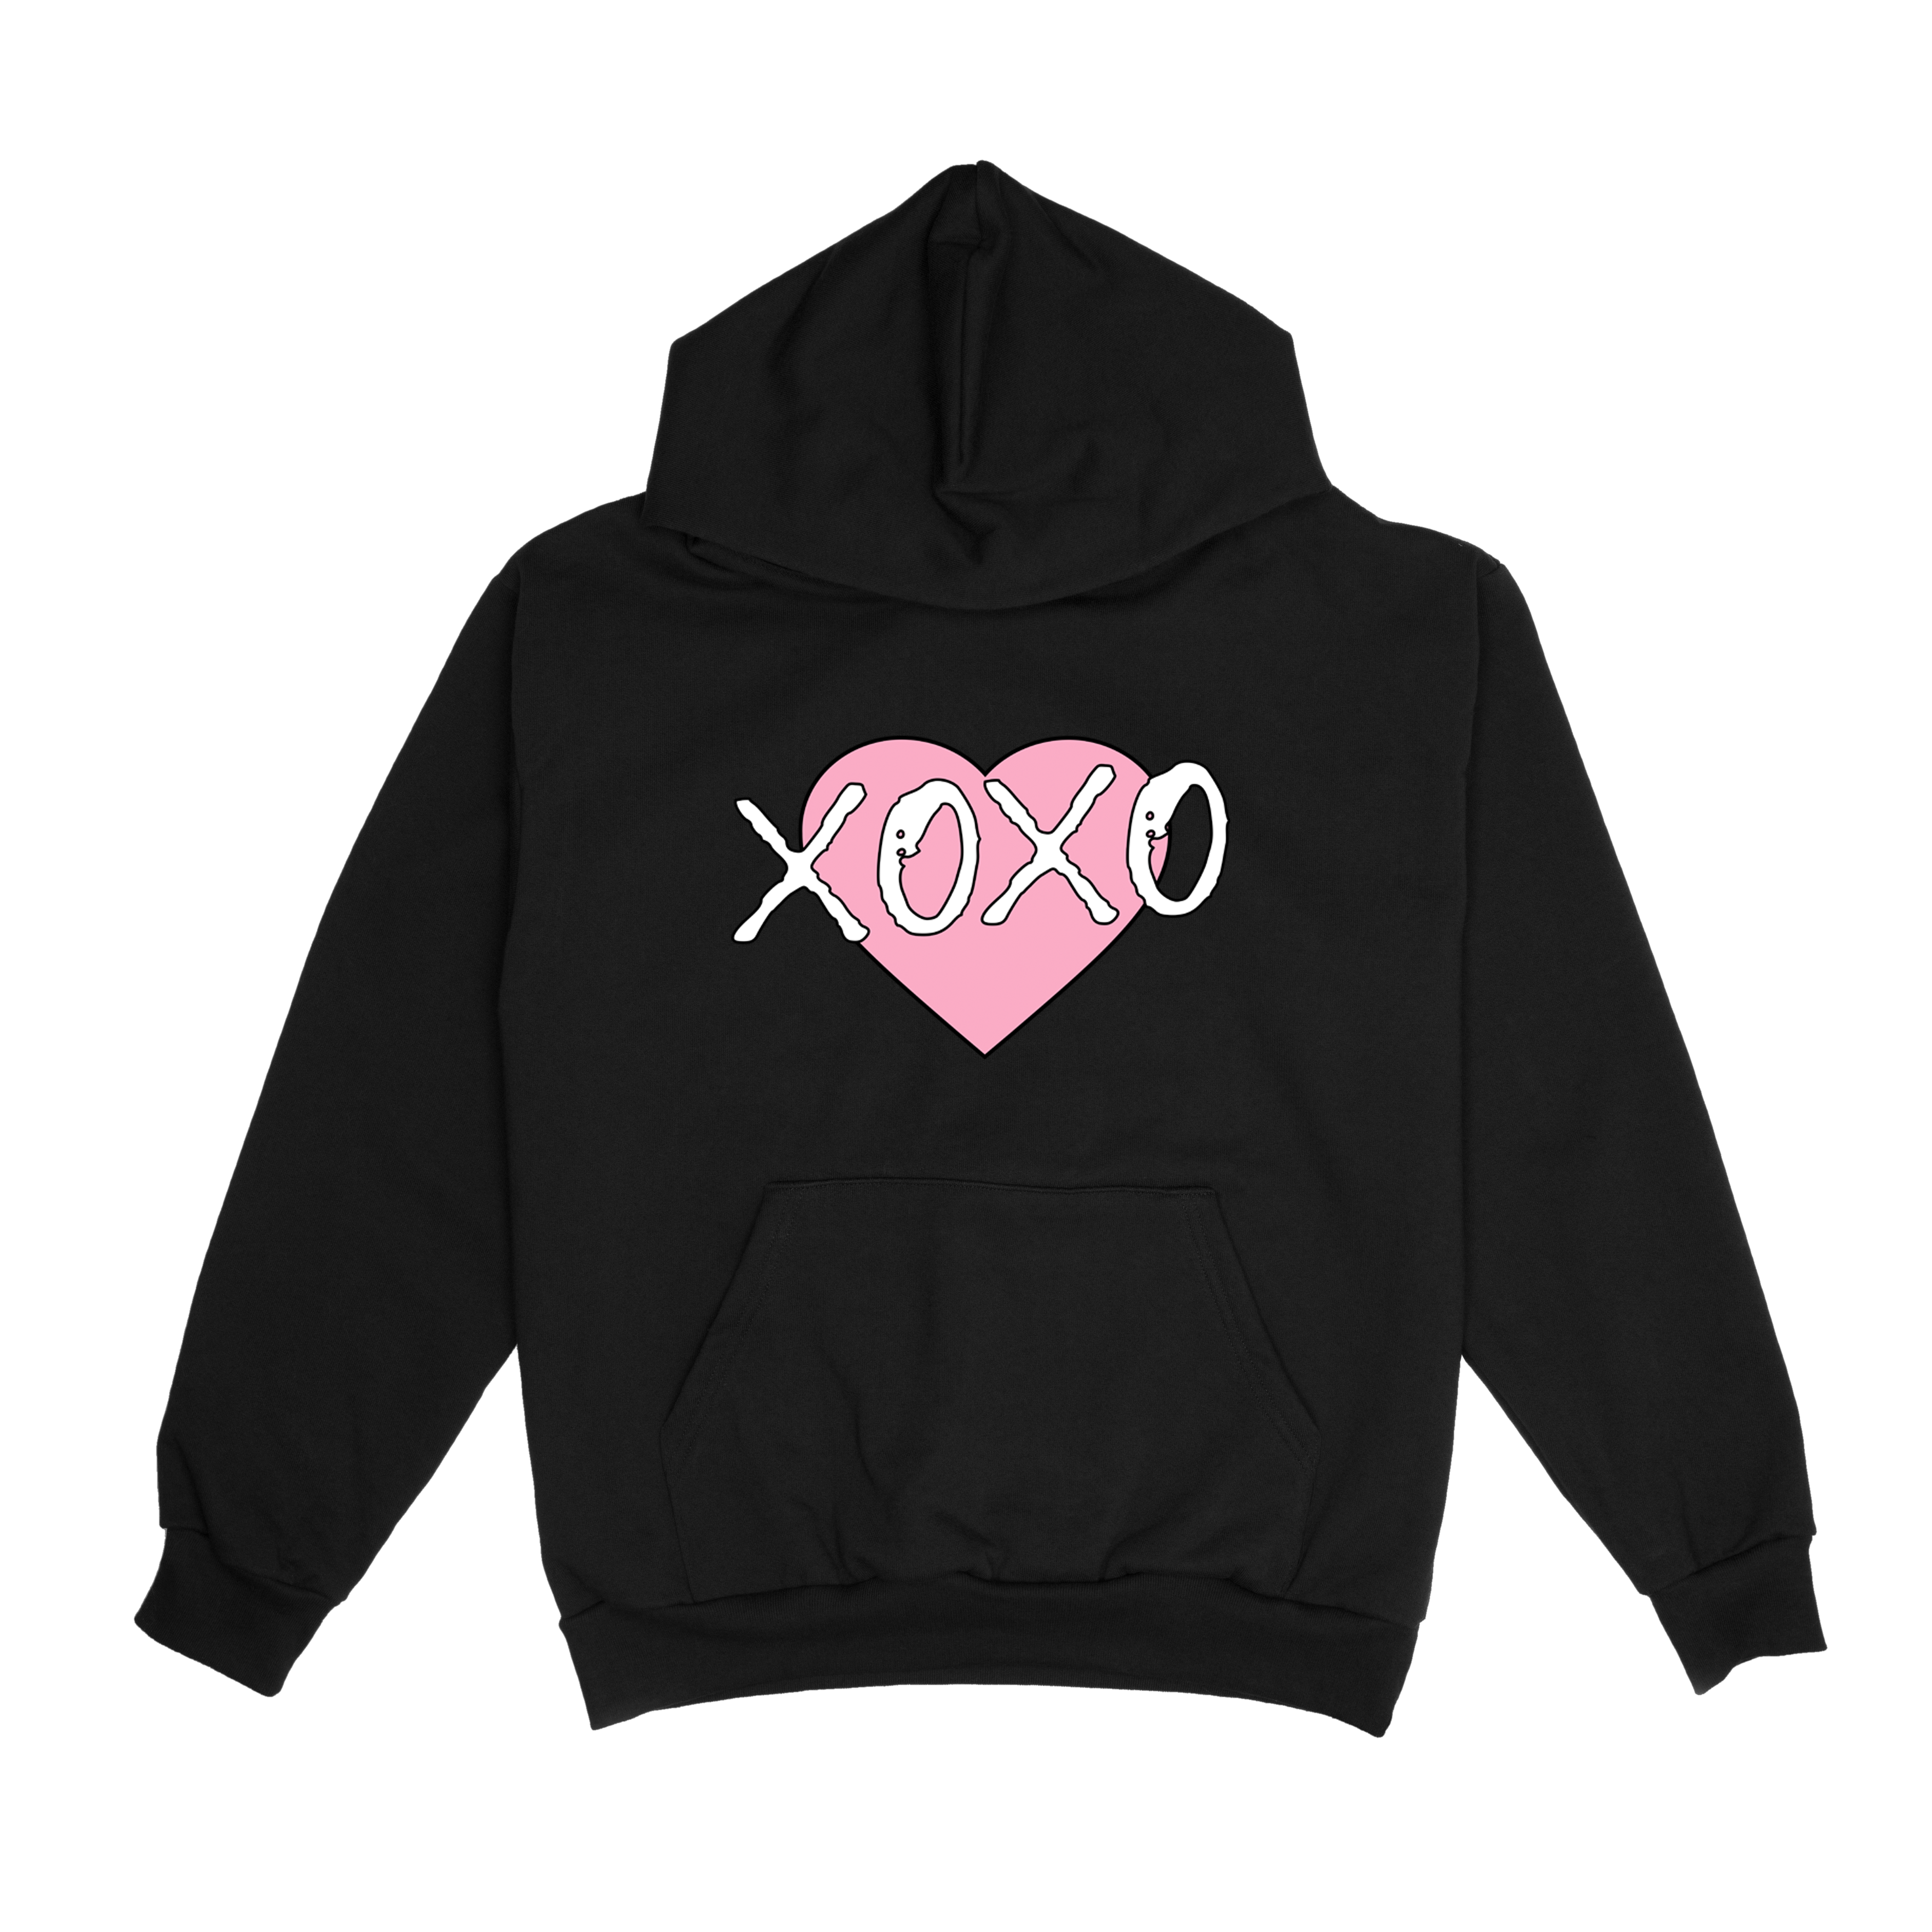 XOXO -Black (Pink Heart)